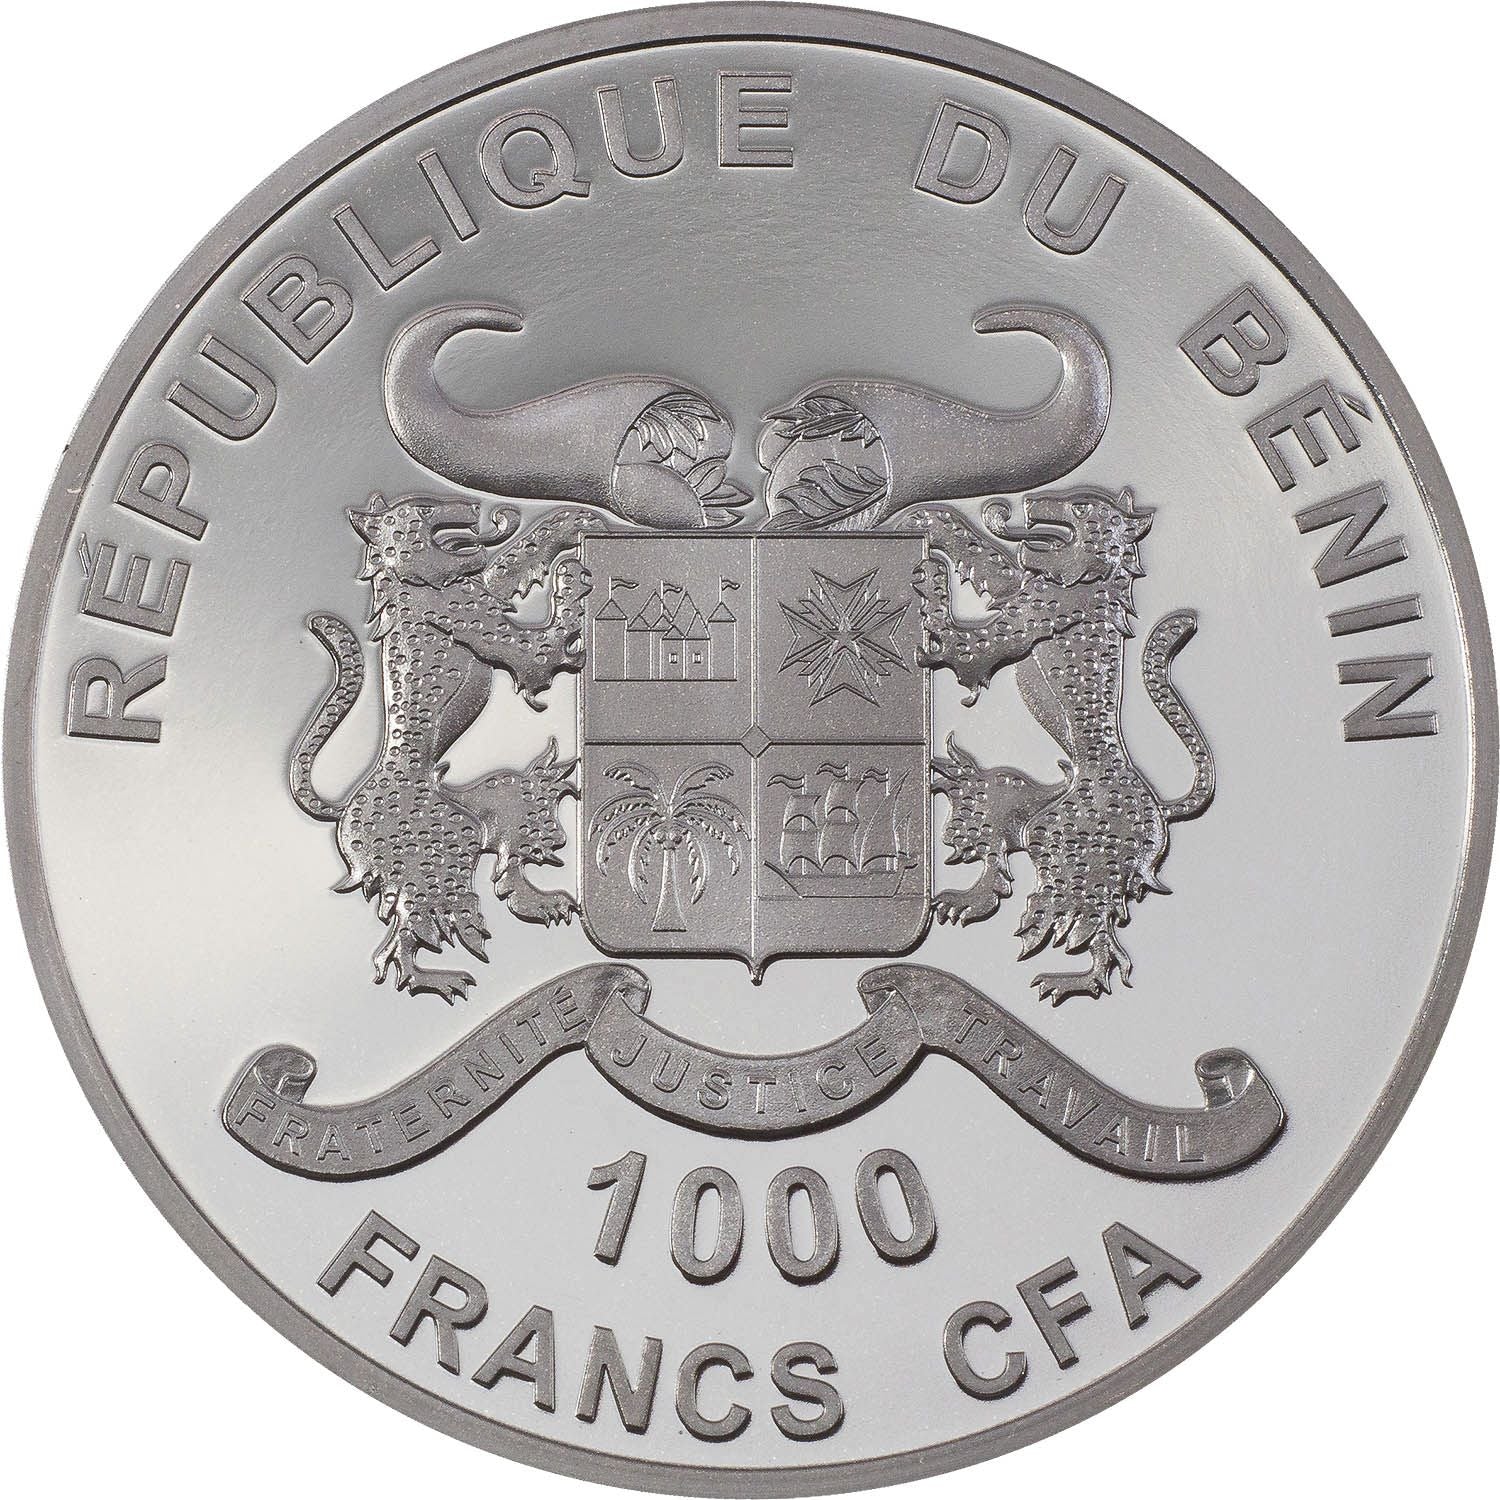 Benin 2021 | Cannabis Sativa Black Proof | 1 Oz 999 Silbermünze 1000 Francs